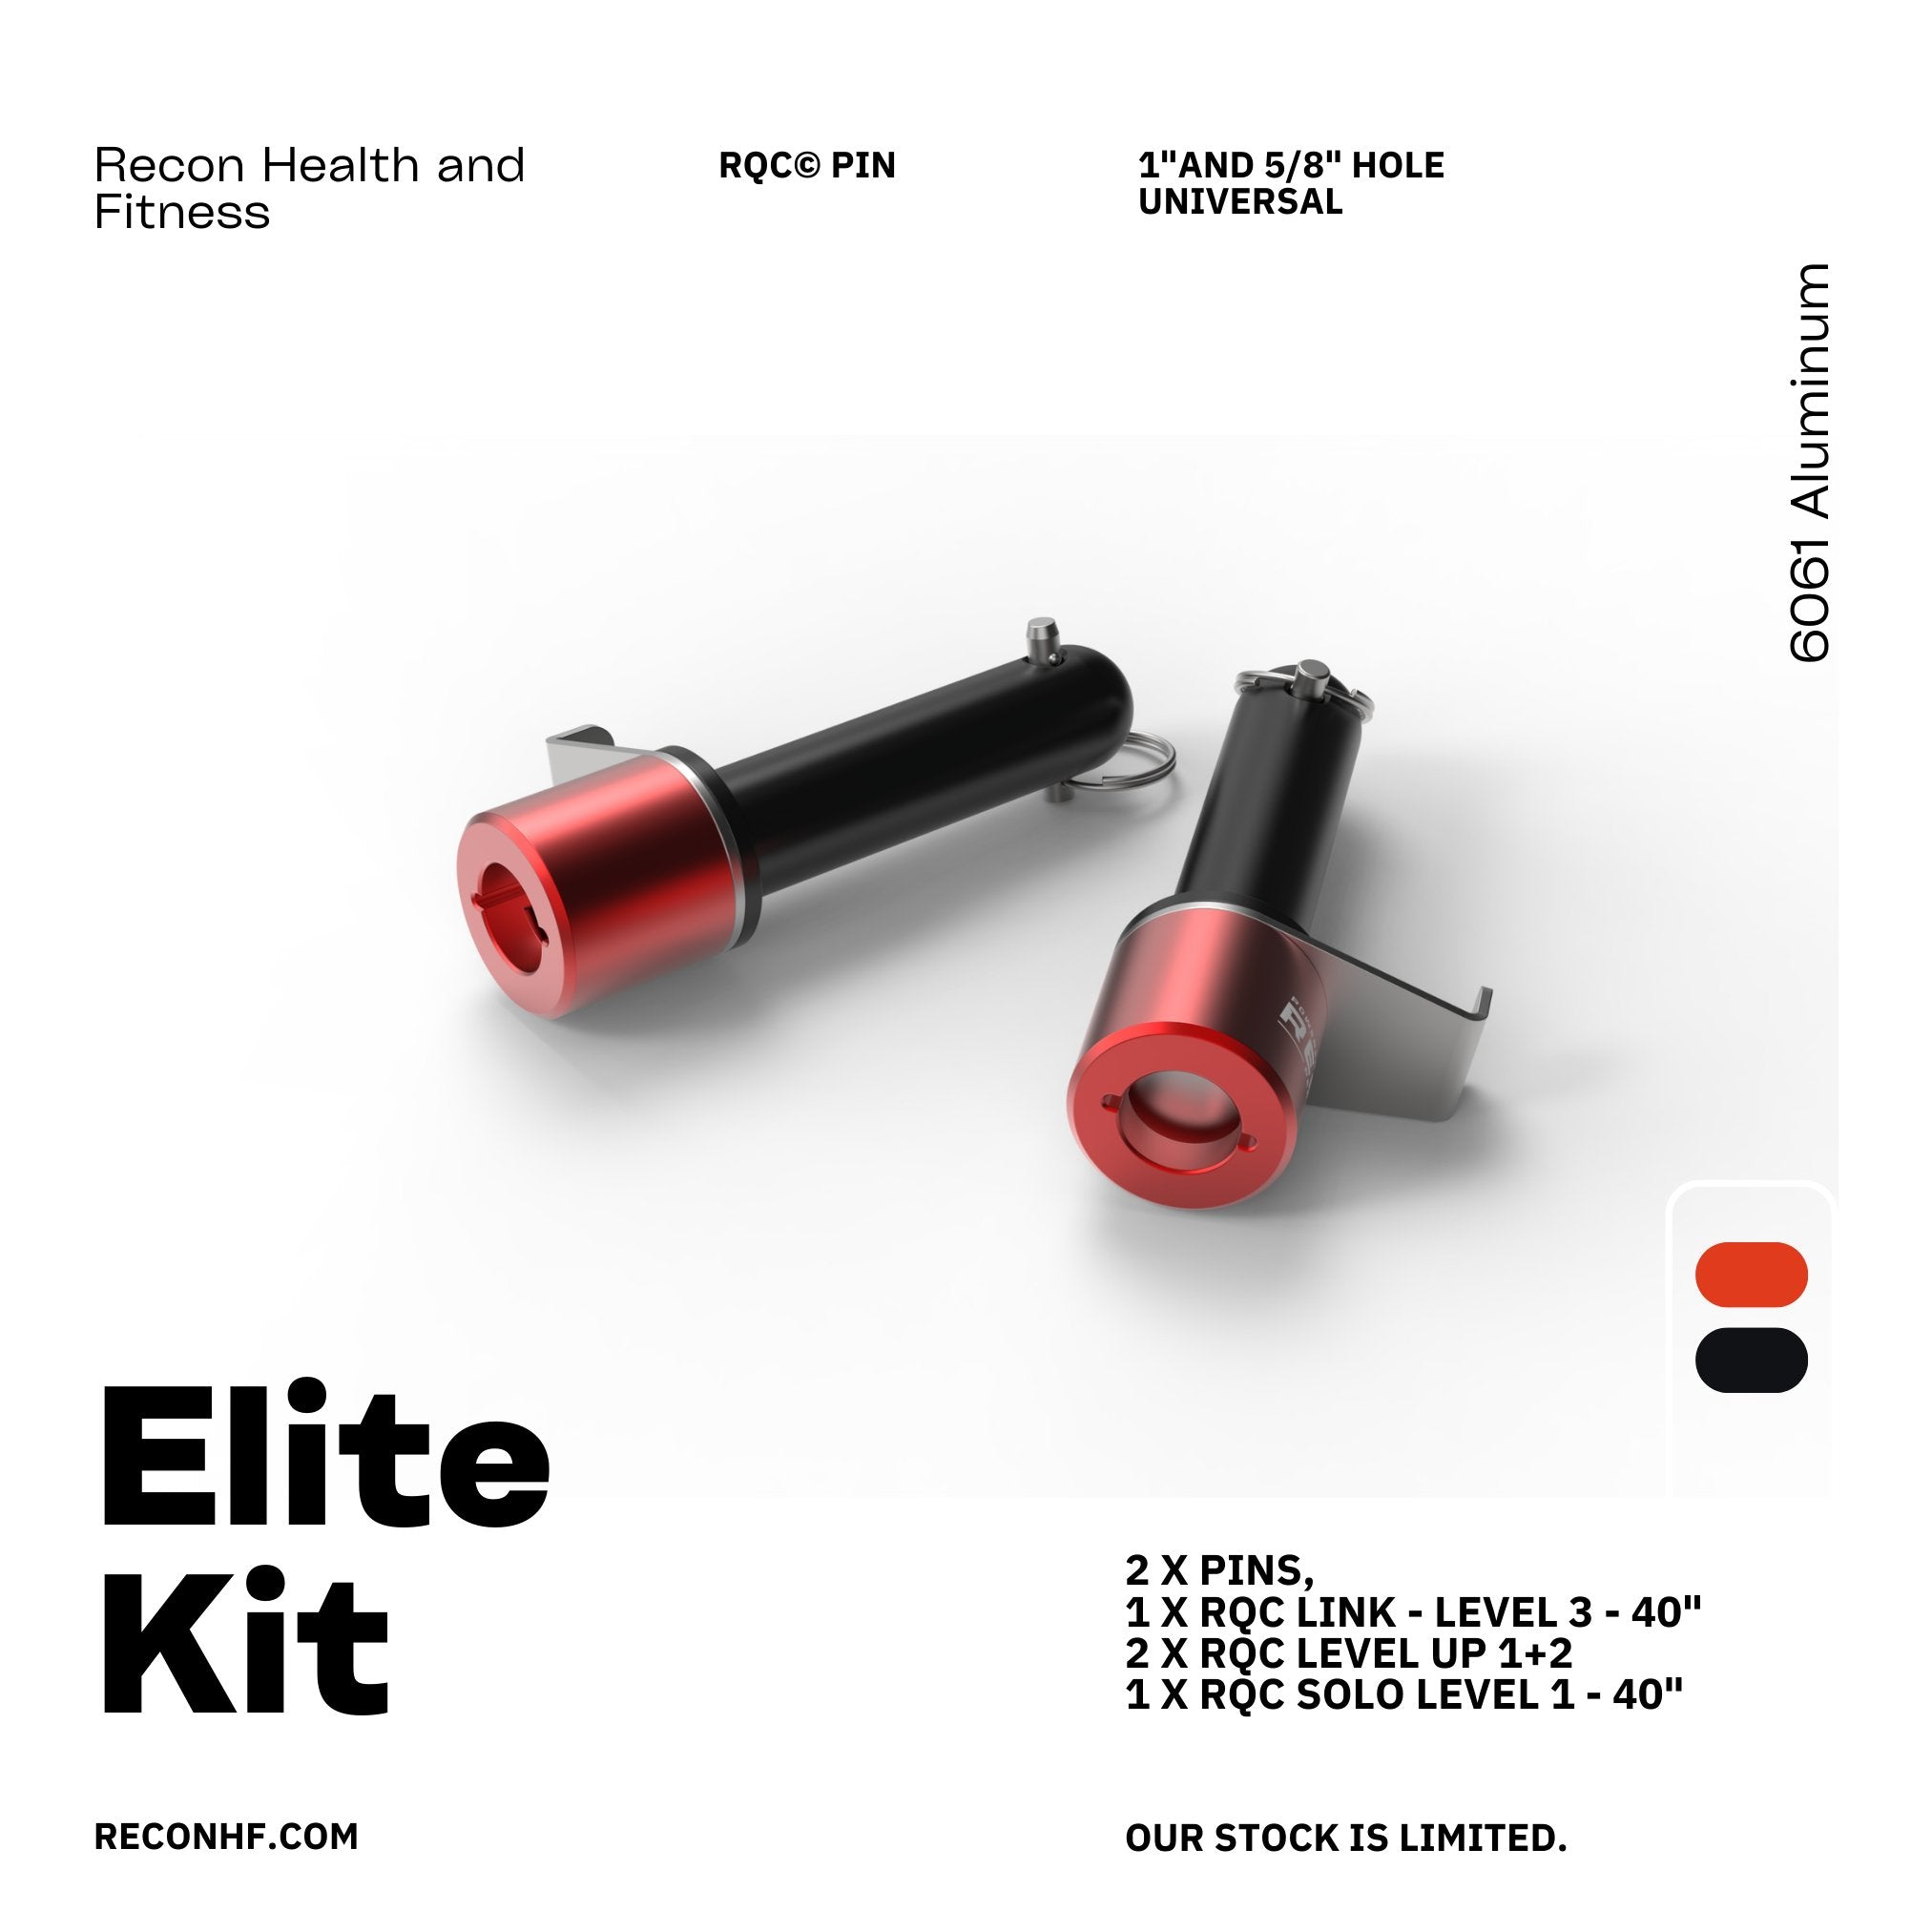 RQC© Pin - PRE ORDER - ELITE - Recon Health & Fitness health and fitness